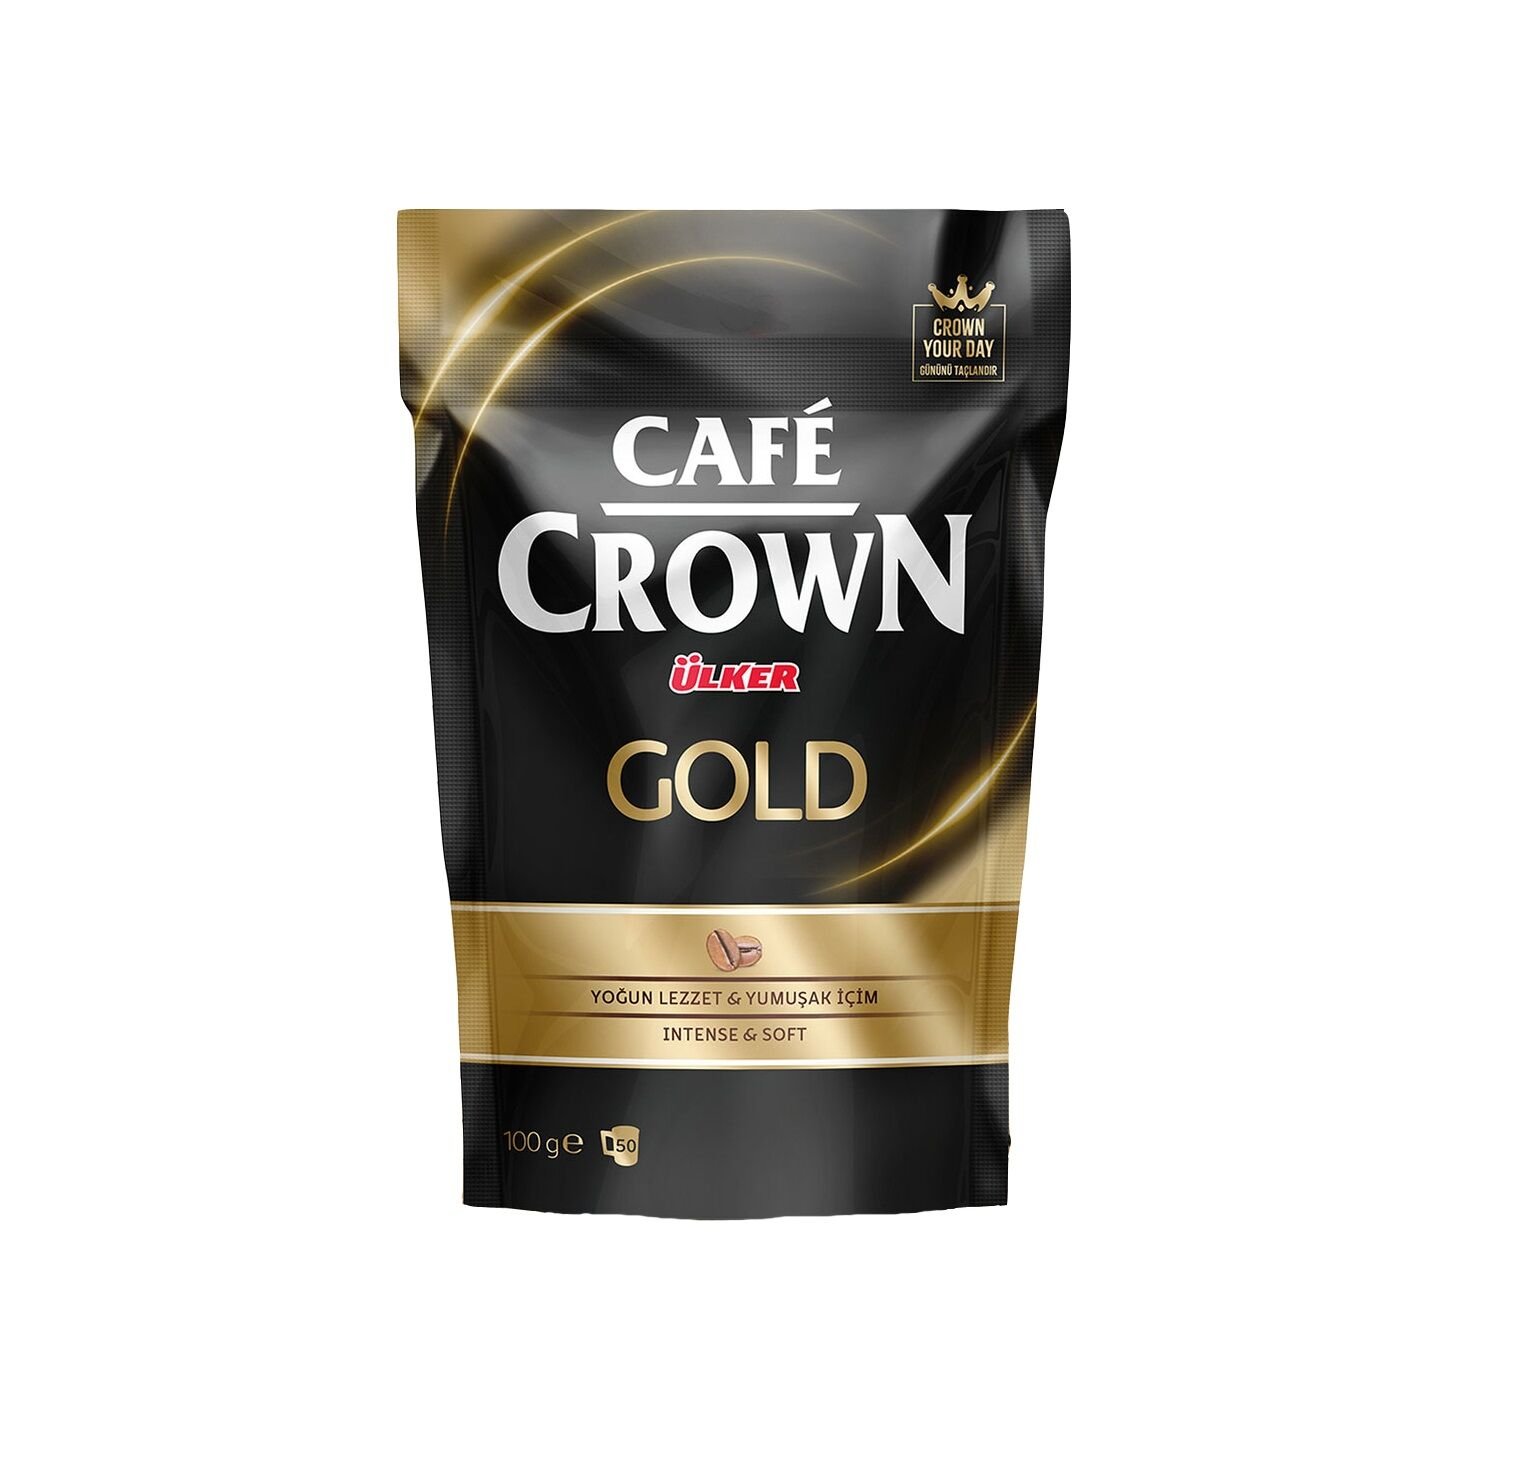 CAFE CROWN  GOLD 100GR EKO PAKET 961-2 1*6